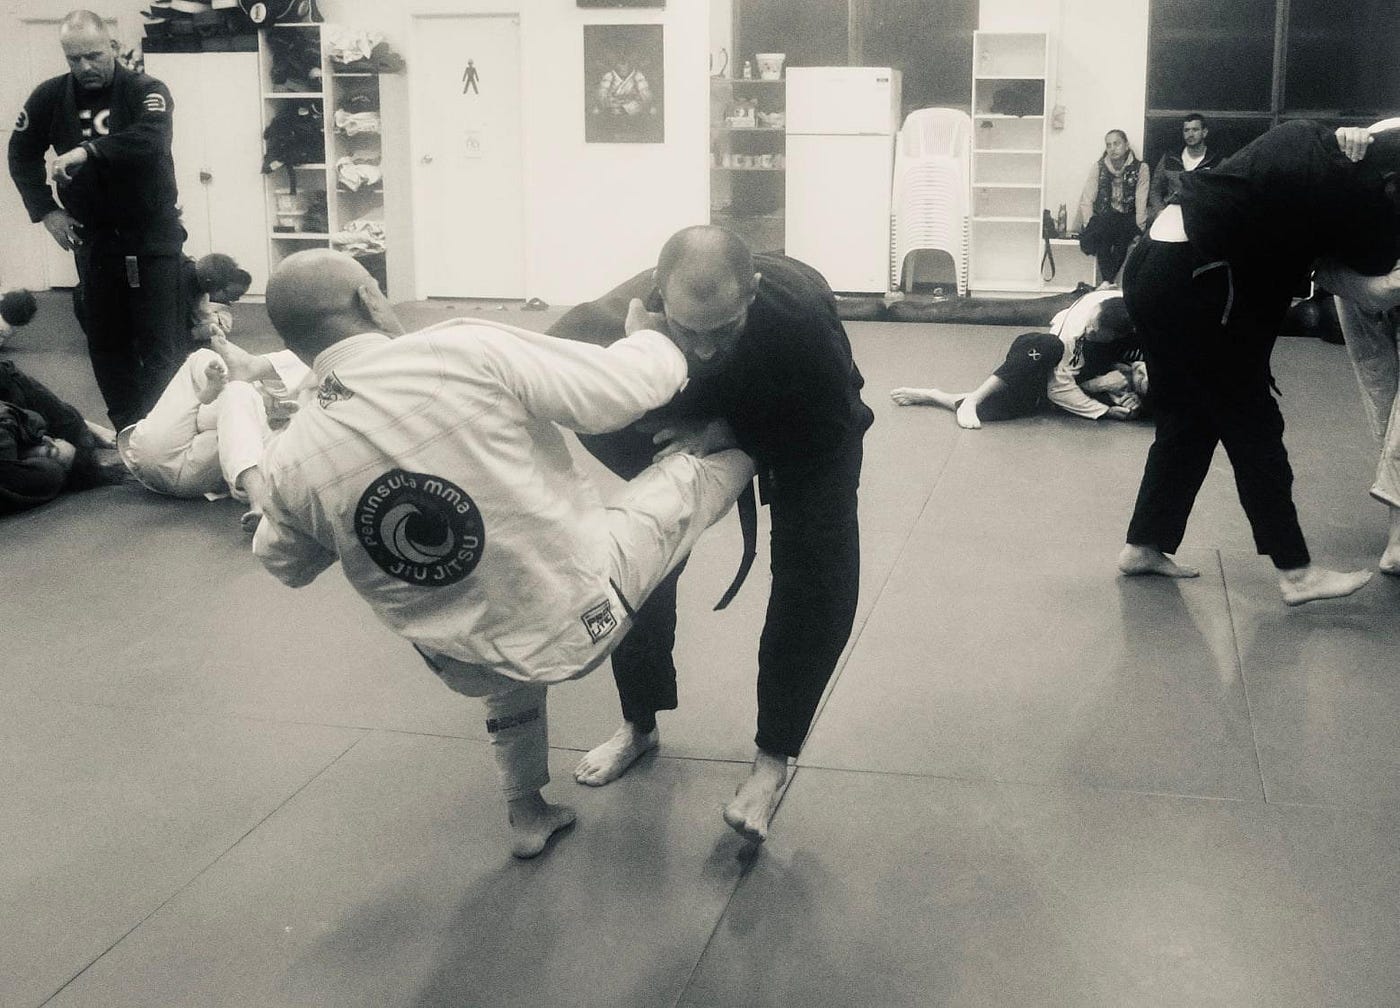 10 benefits of training Brazilian Jiu Jitsu - Absolute MMA